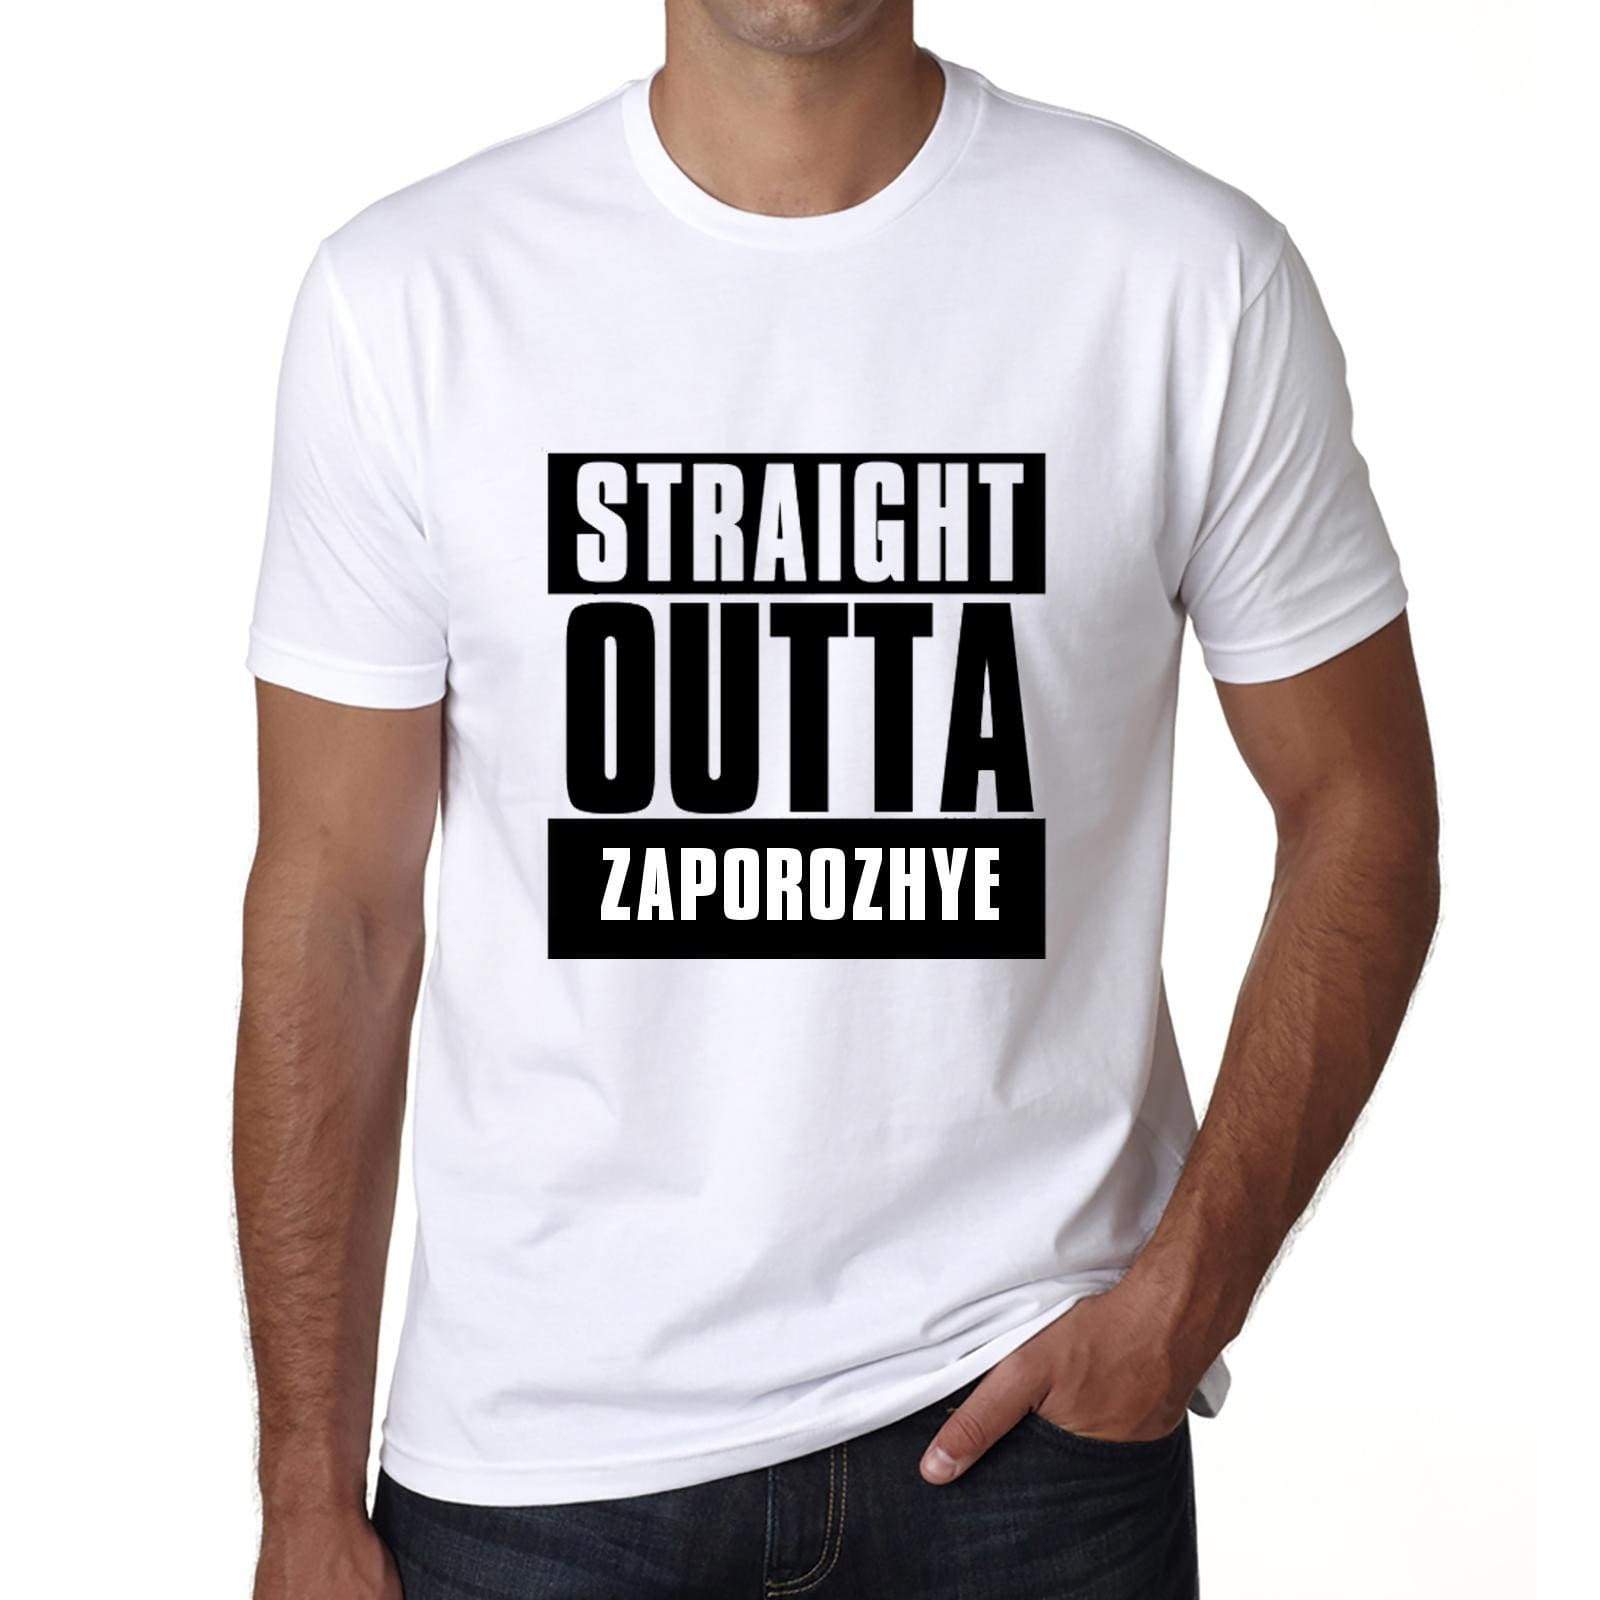 Straight Outta Zaporozhye Mens Short Sleeve Round Neck T-Shirt 00027 - White / S - Casual